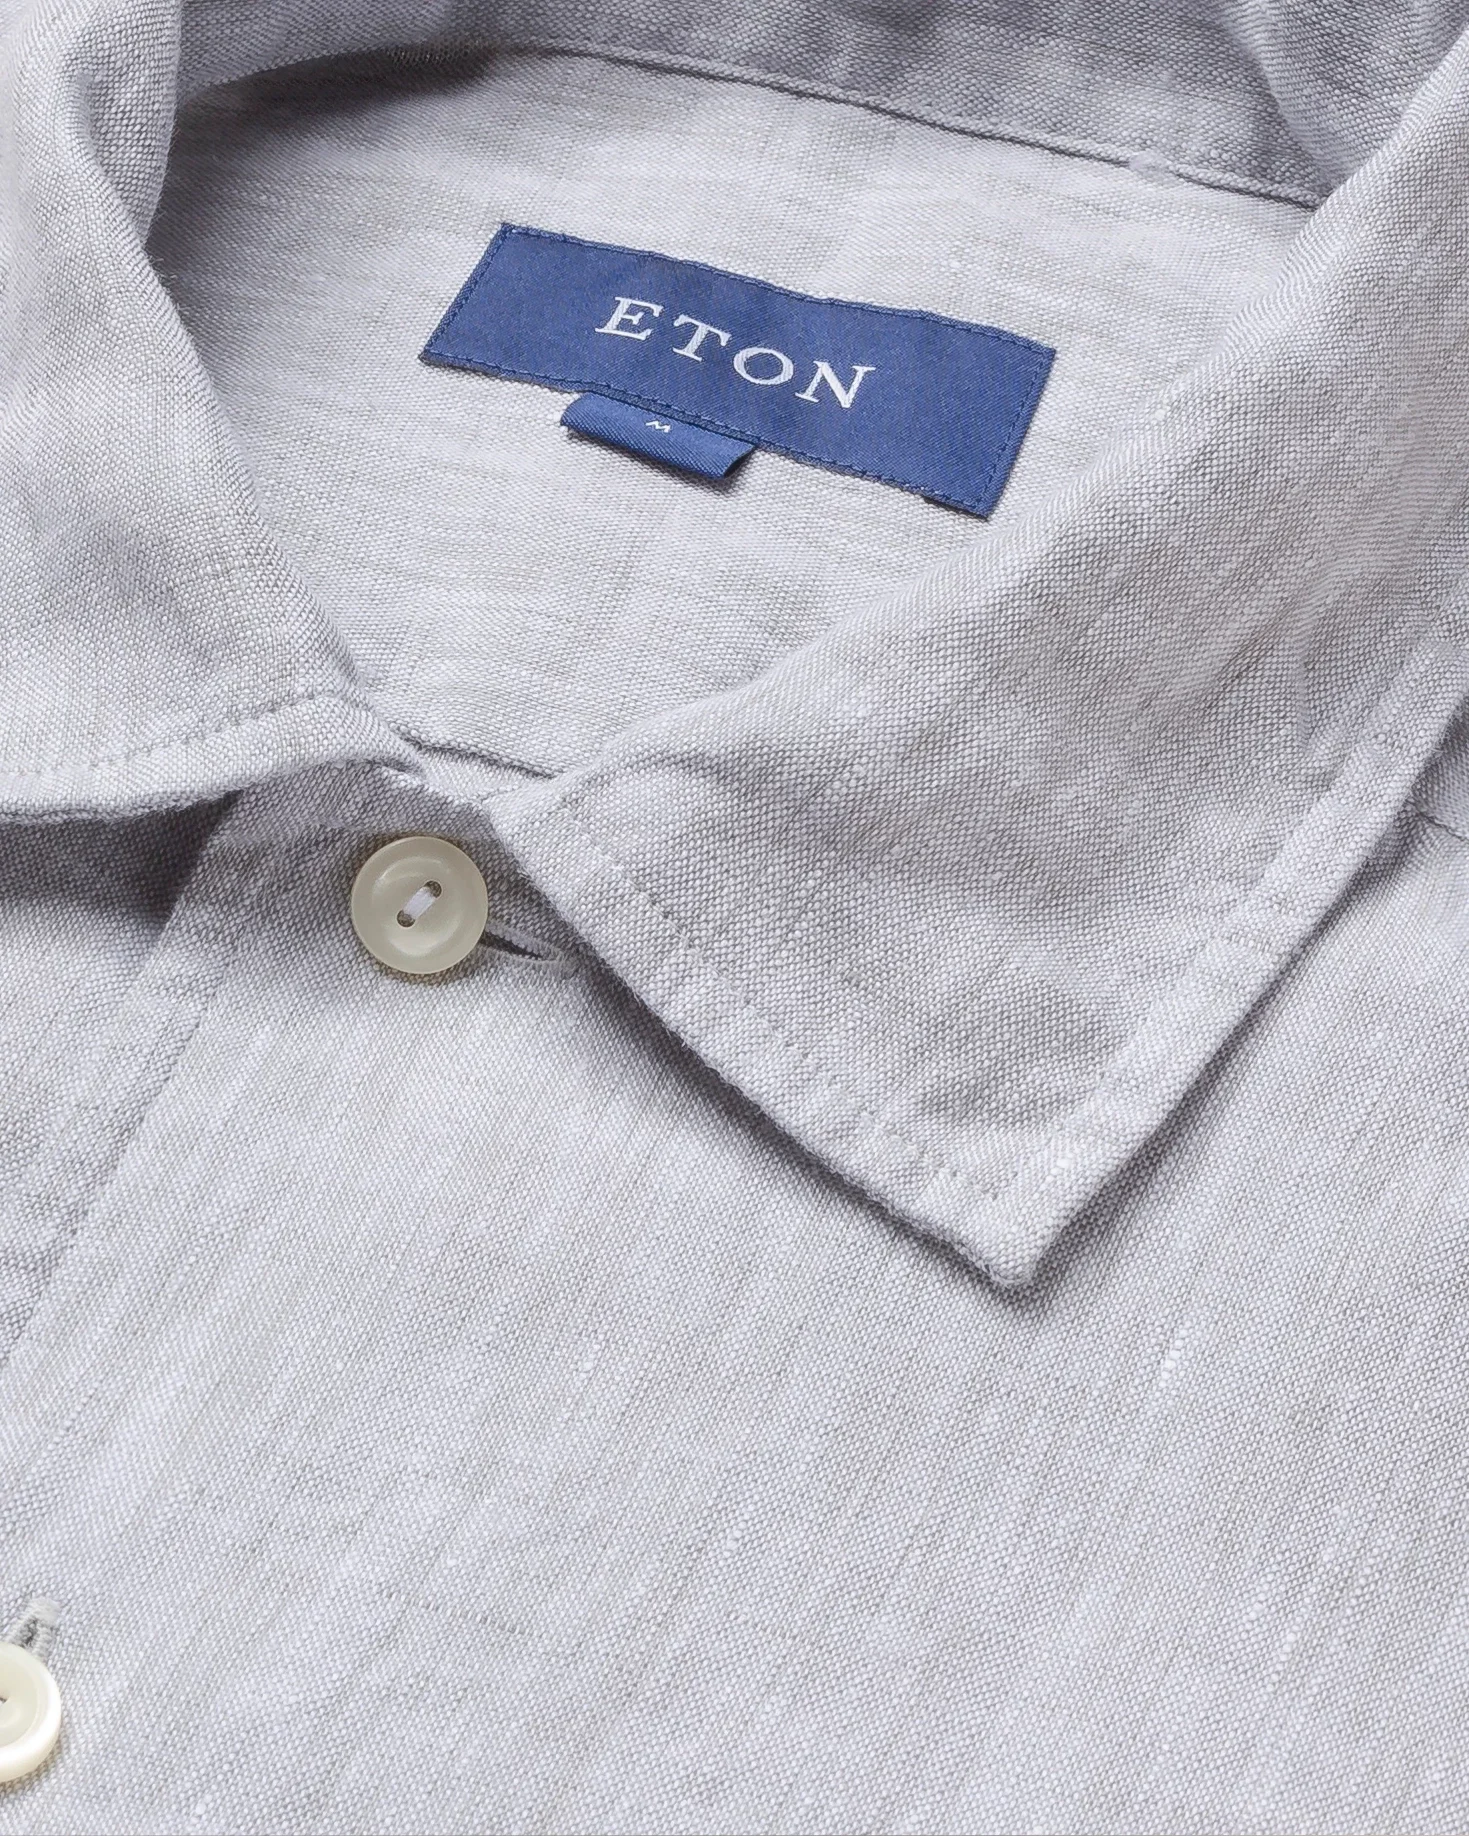 Eton - grey linen resort shirt